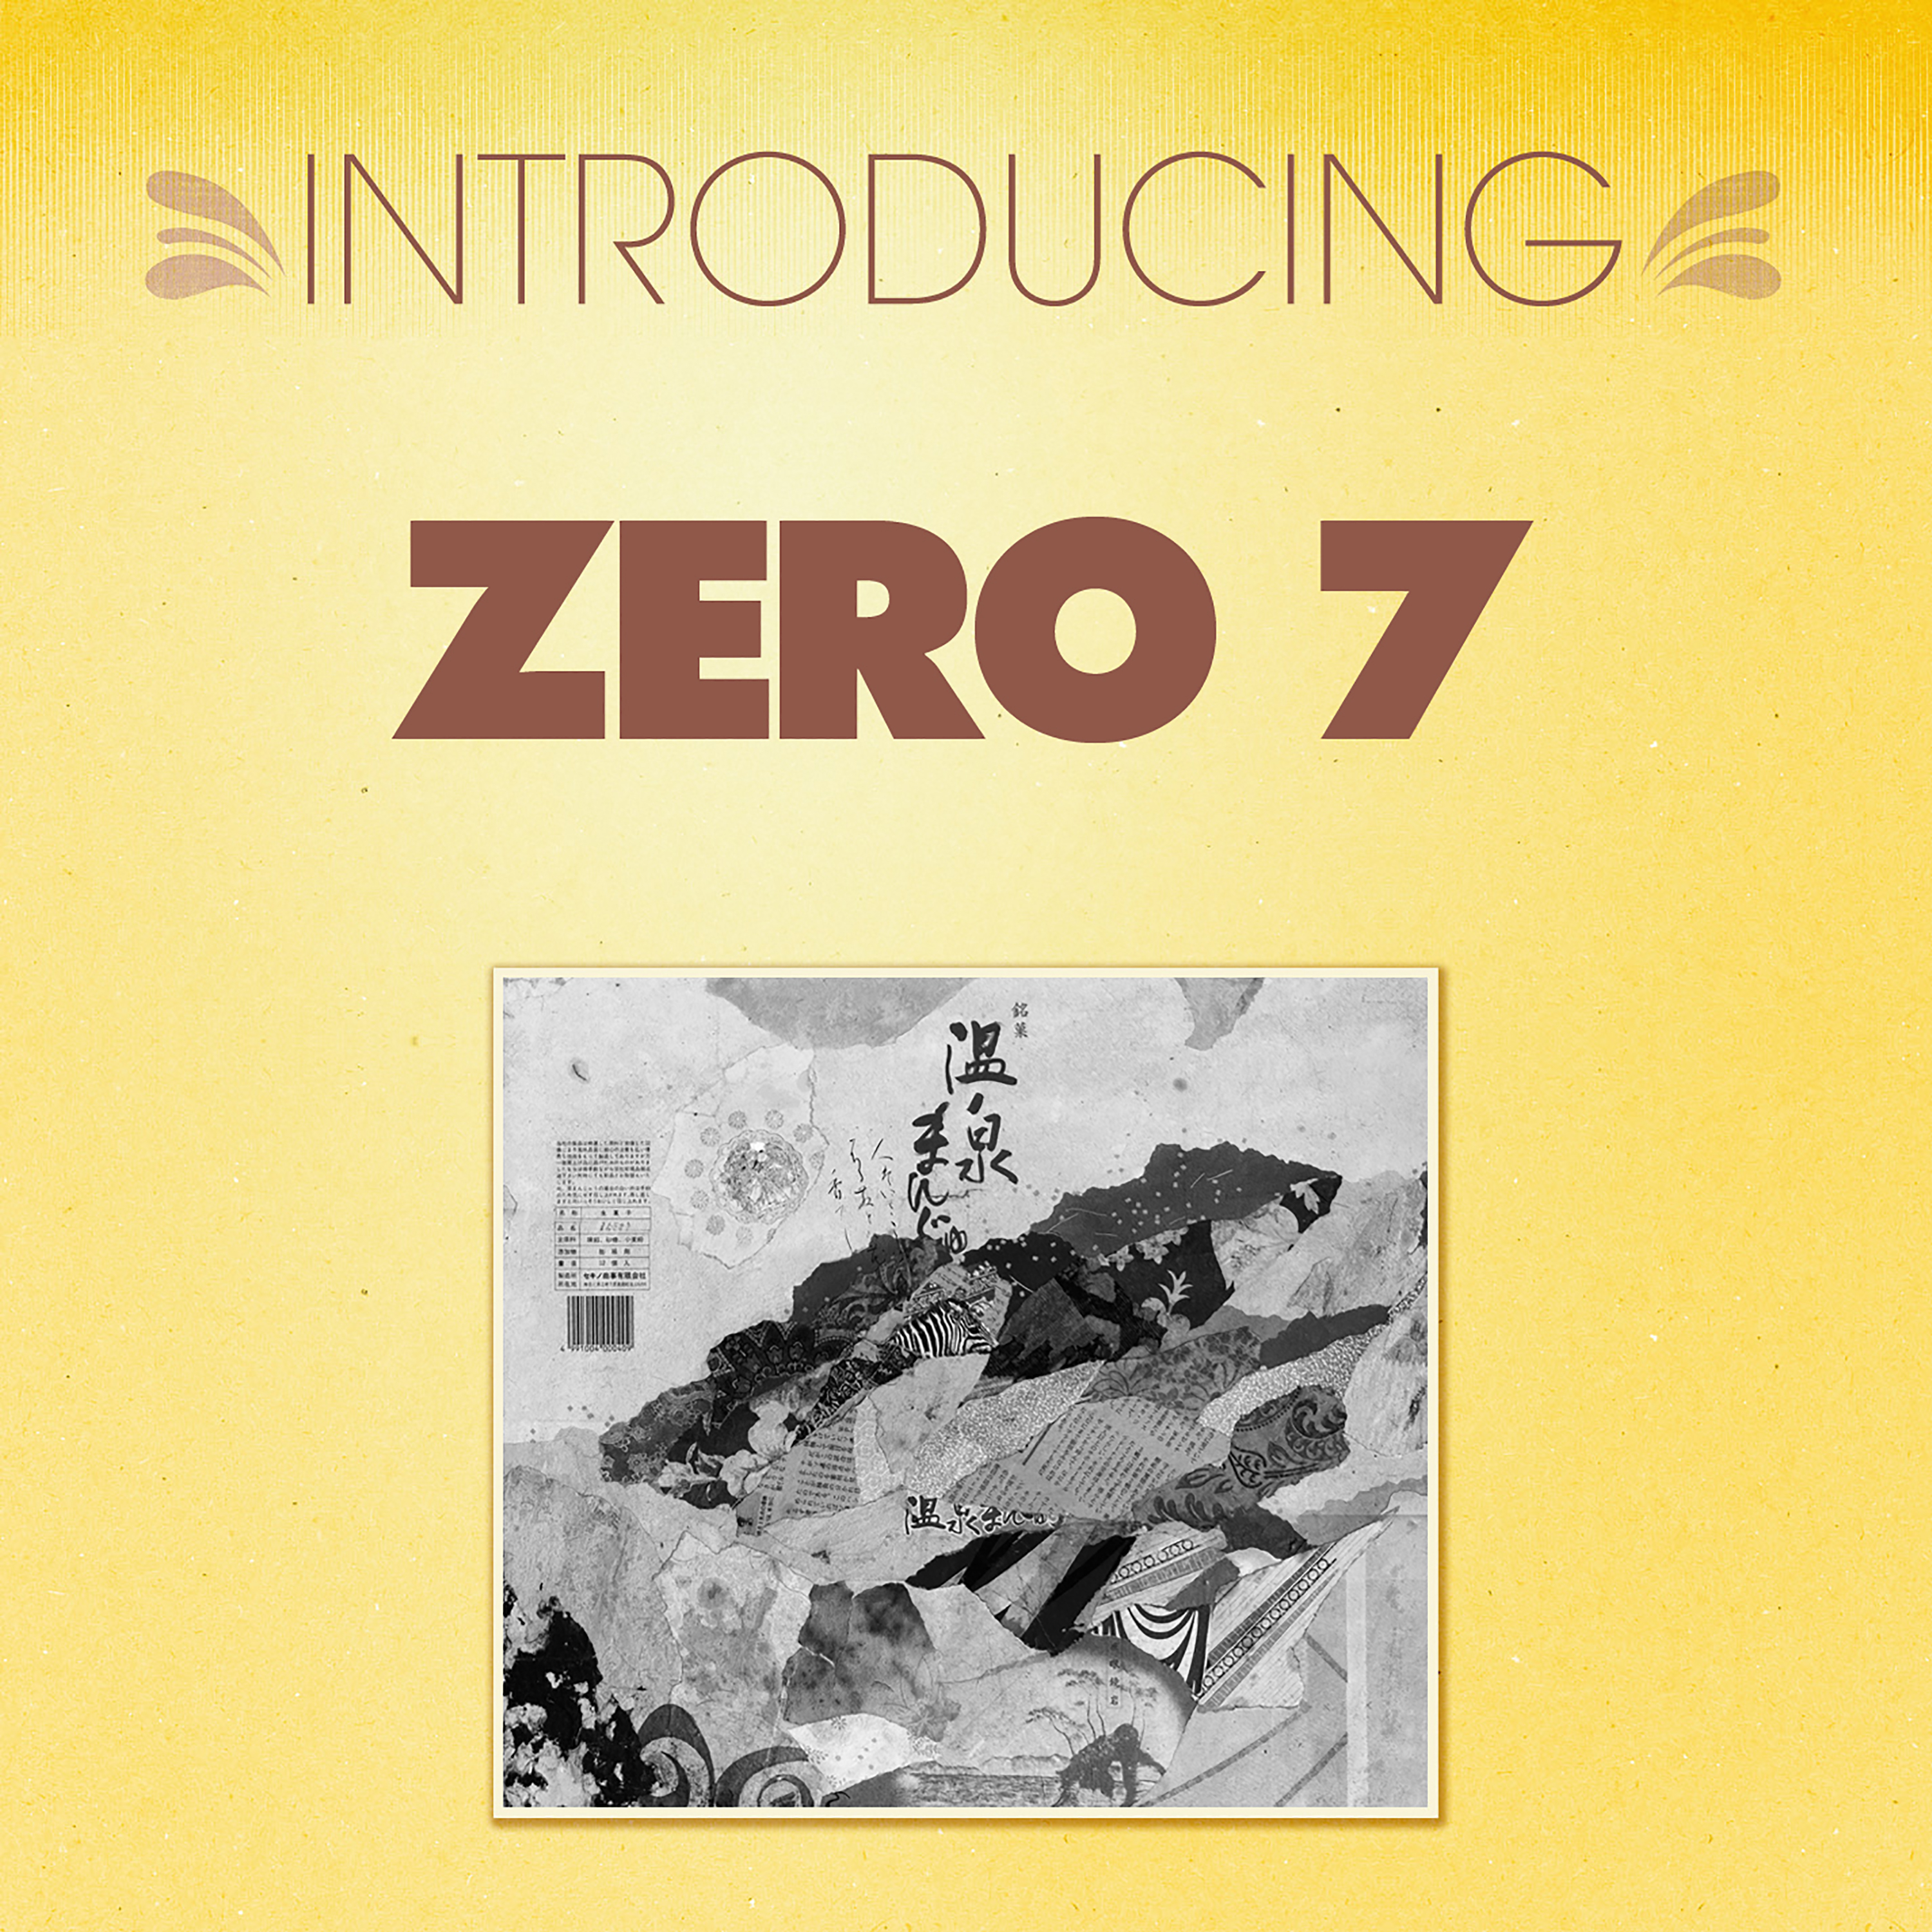 Introducing... Zero 7